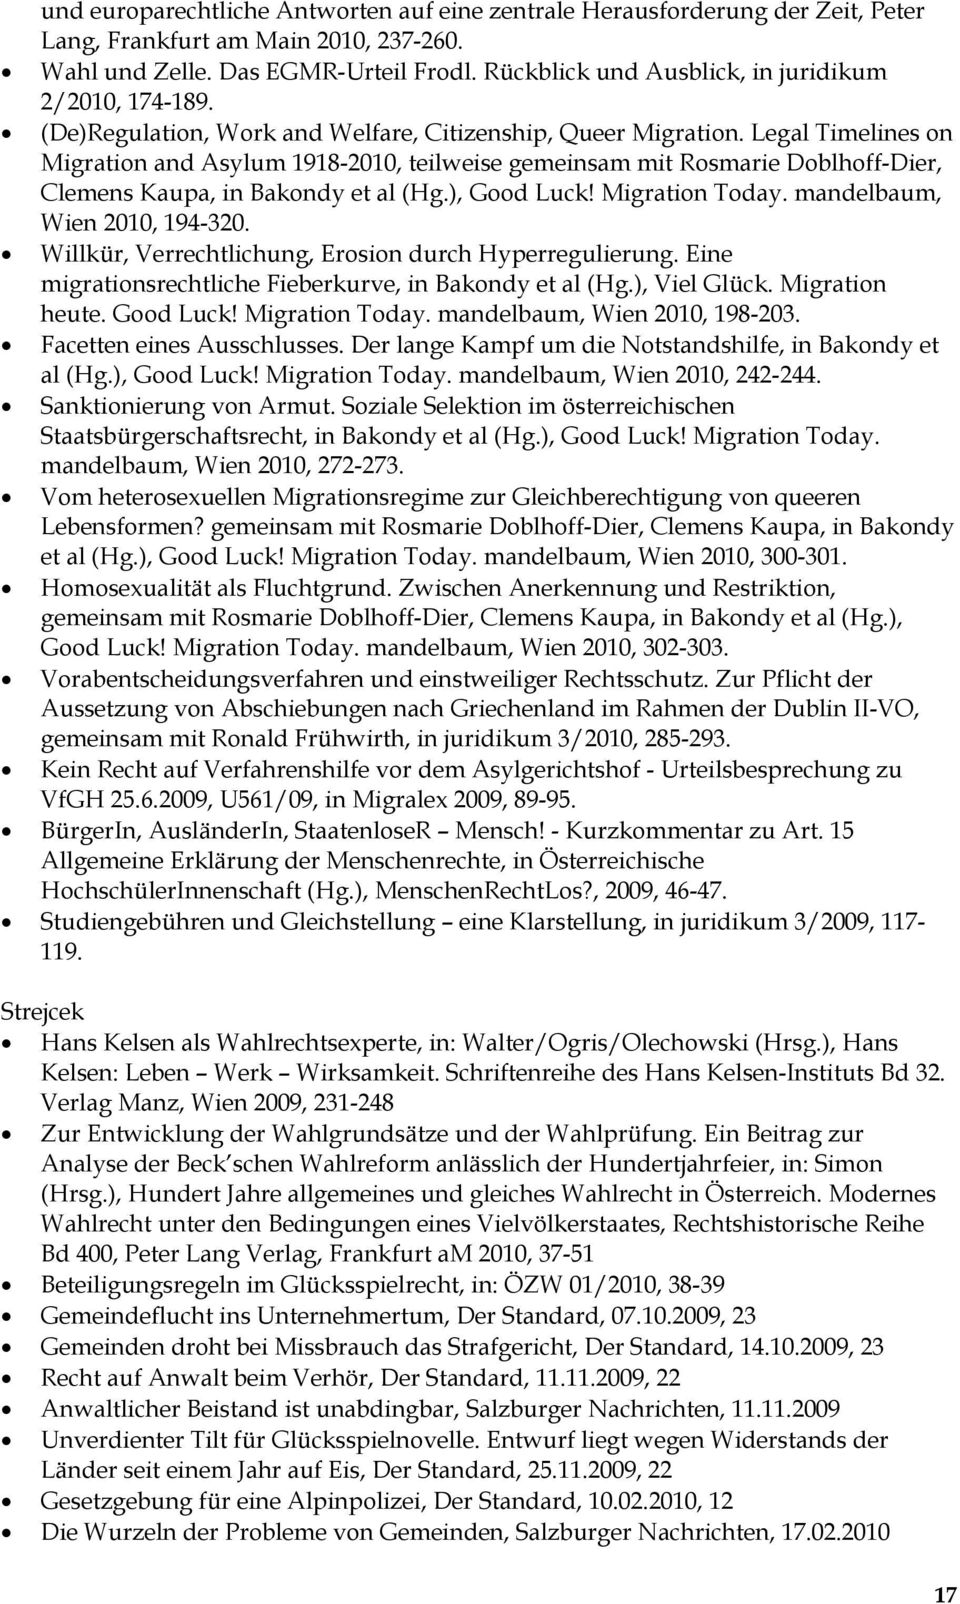 Legal Timelines on Migration and Asylum 1918-2010, teilweise gemeinsam mit Rosmarie Doblhoff-Dier, Clemens Kaupa, in Bakondy et al (Hg.), Good Luck! Migration Today. mandelbaum, Wien 2010, 194-320.